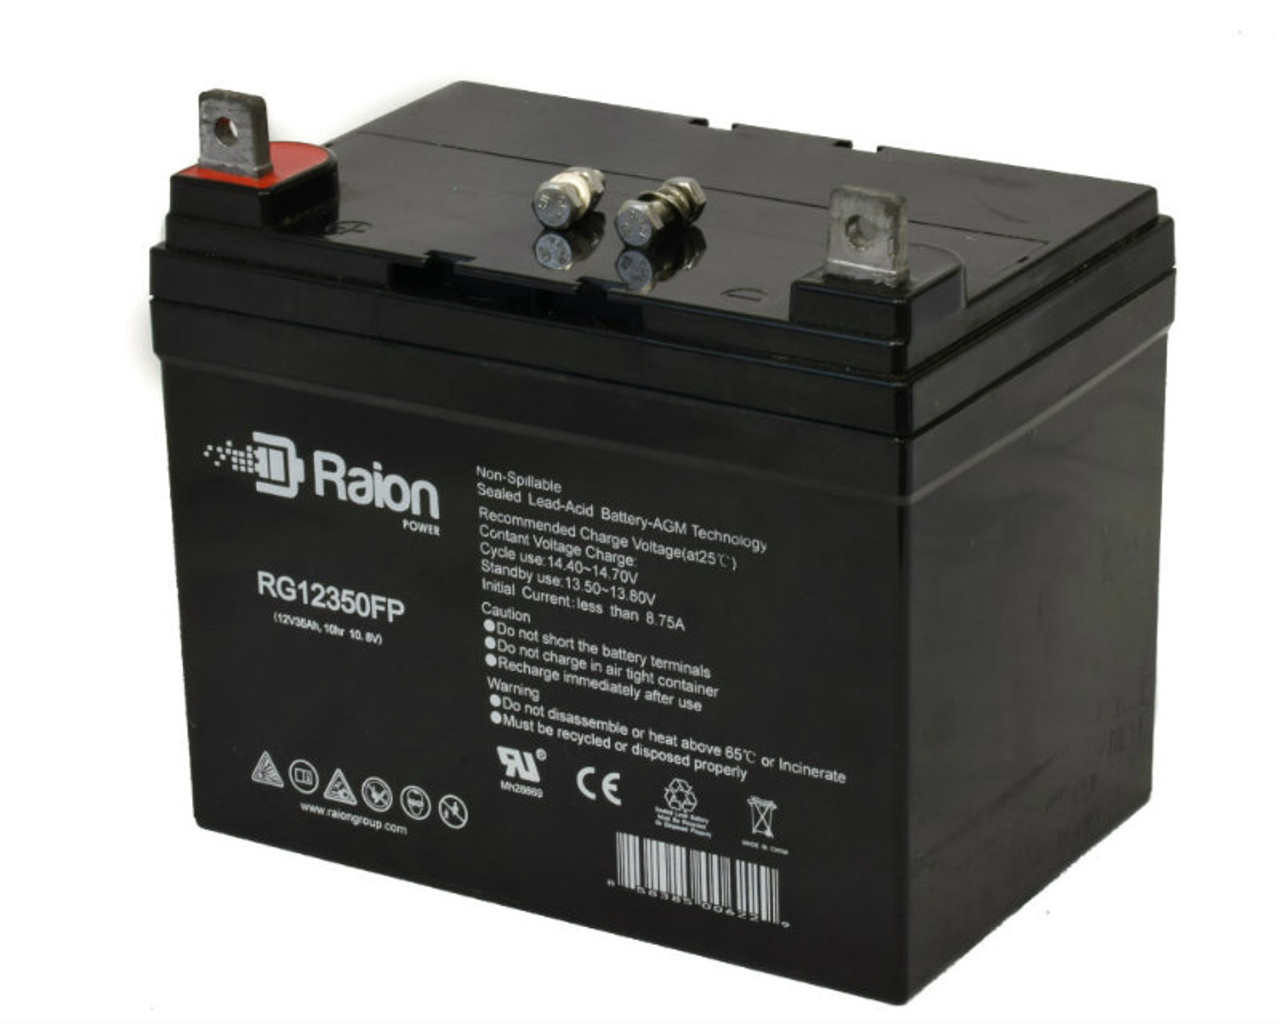 Raion Power Replacement 12V 35Ah RG12350FP Battery for Ingersol Equipment 5320V